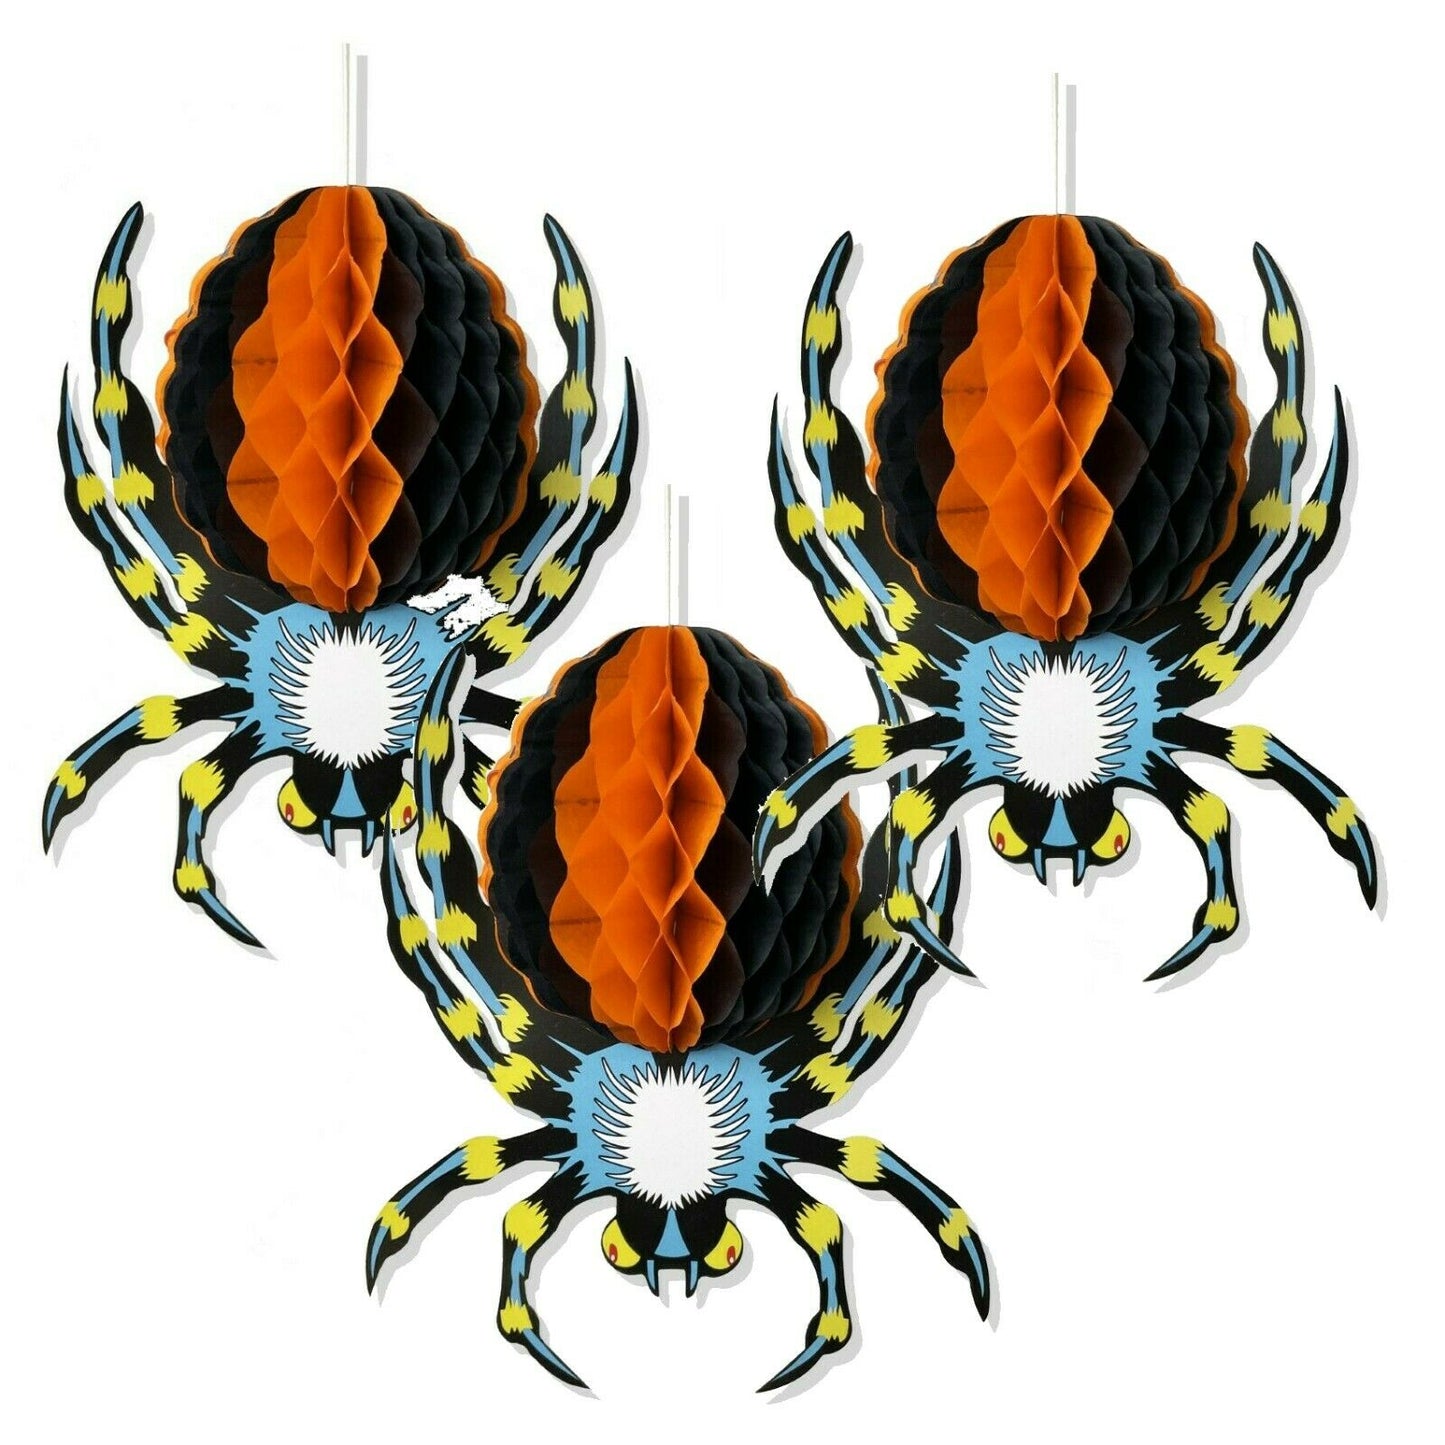 3 x Large Halloween Paper 3D Hanging Decorations Scary Black Orange Blue Spider